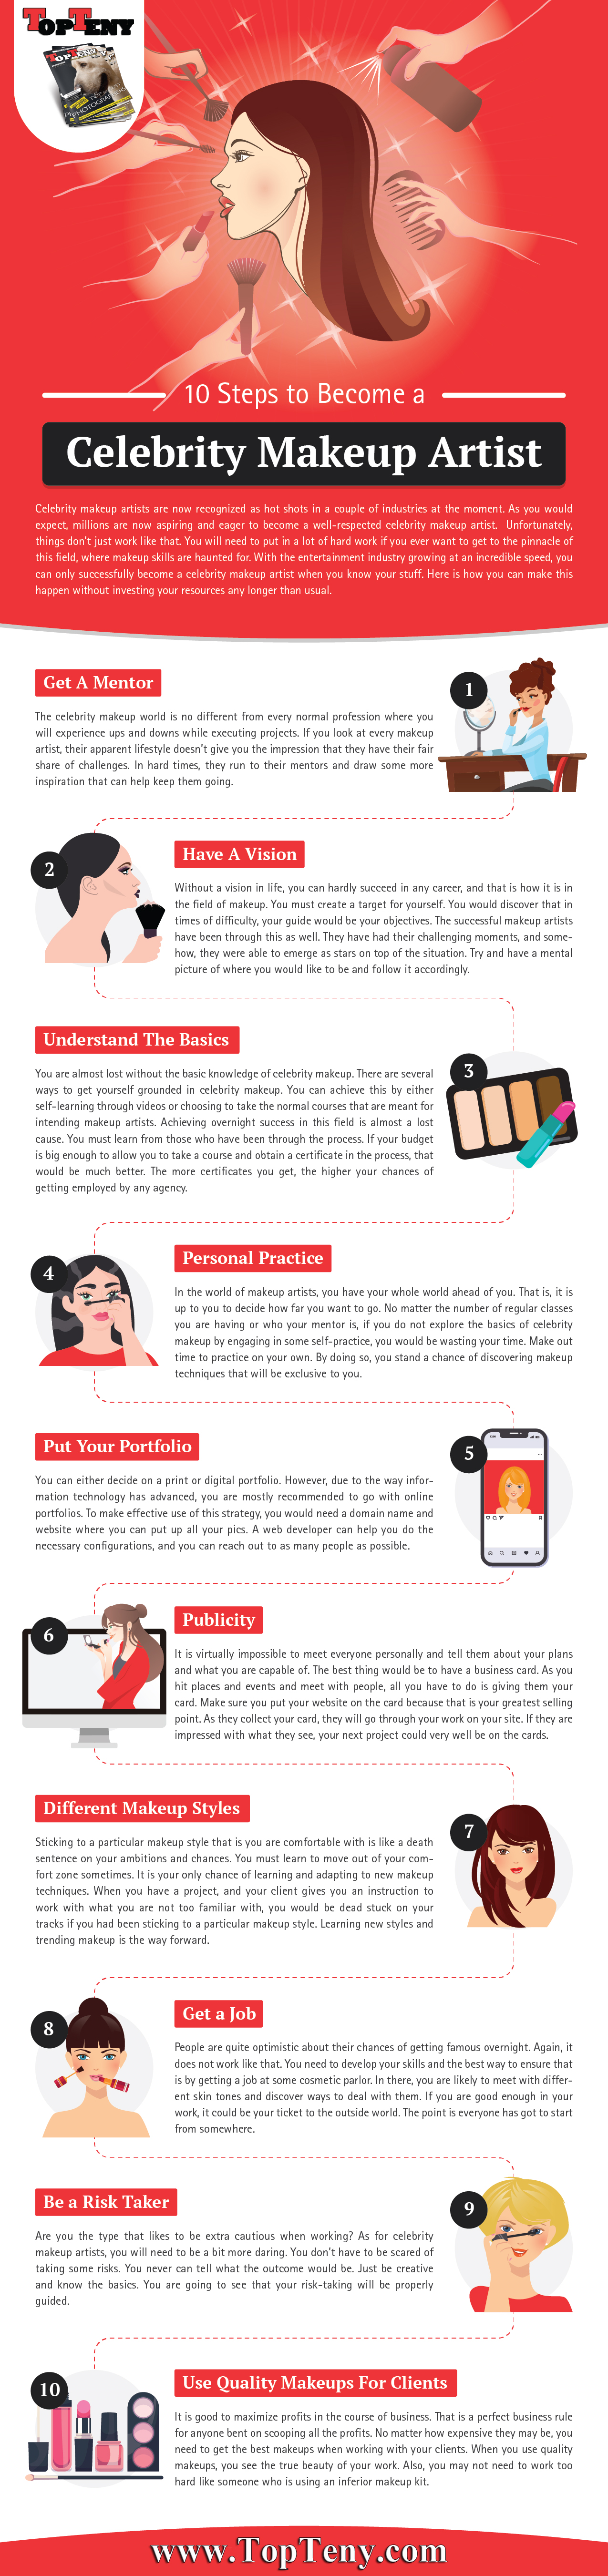 10 Steps to Become a Celebrity Makeup Artist